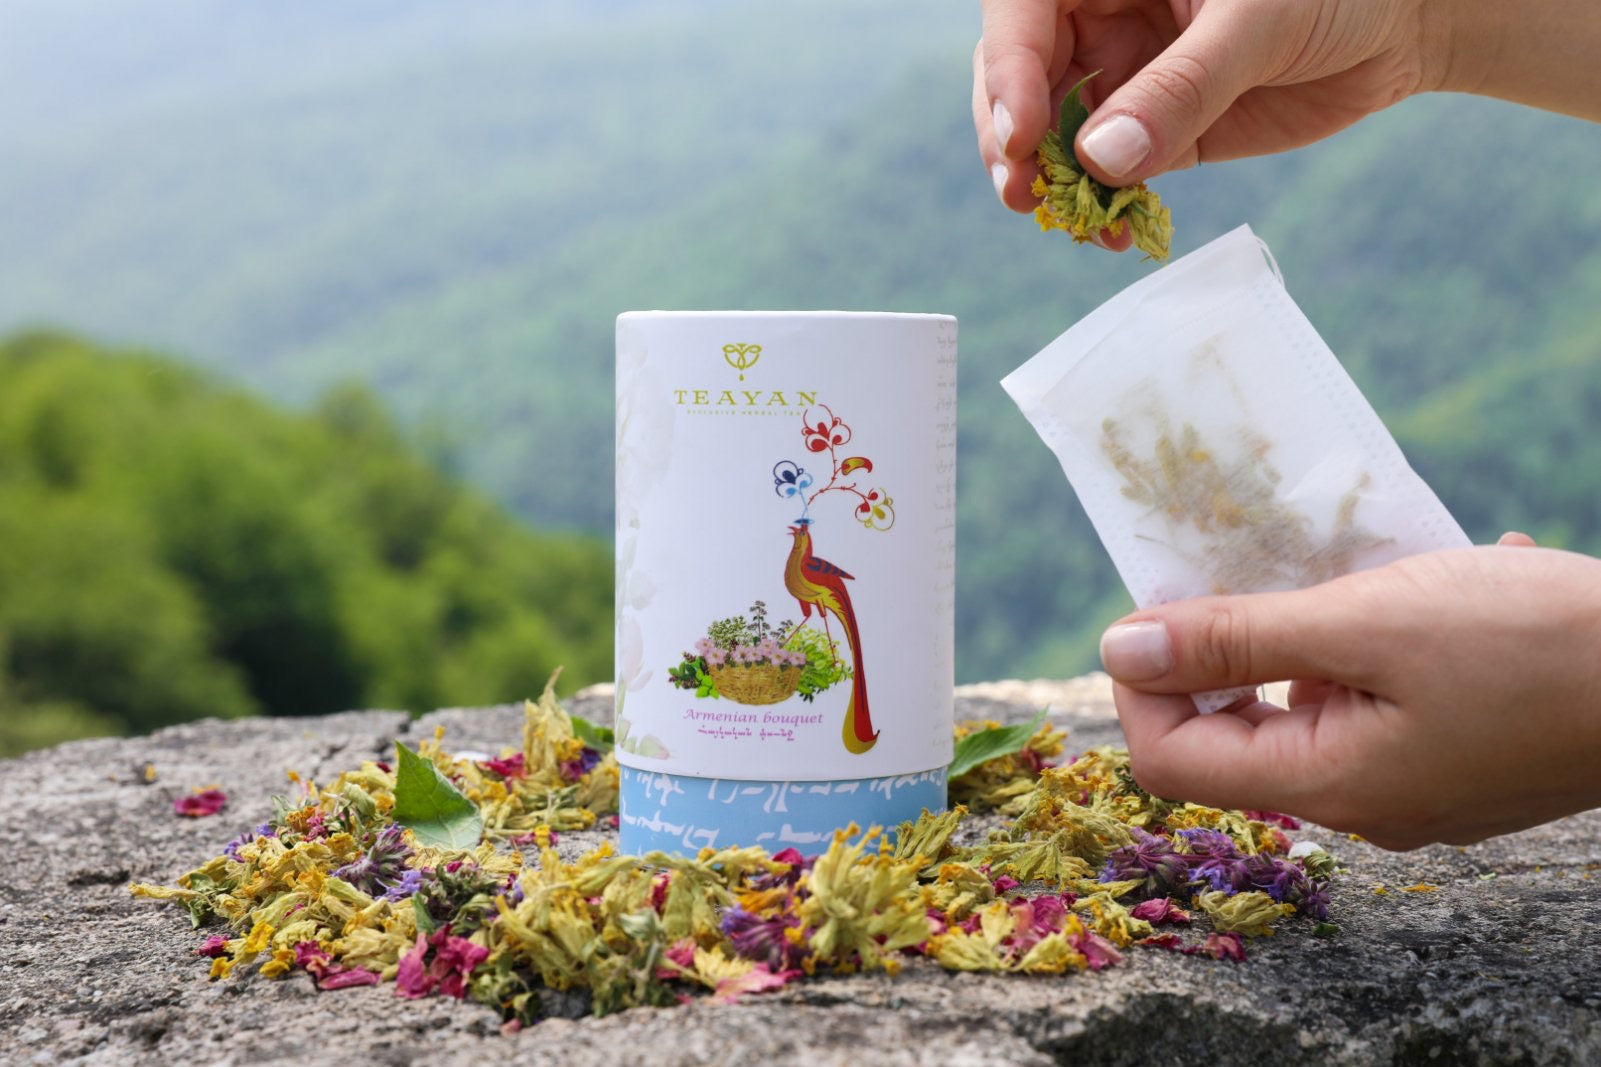 TeaYan Herbal Tea “Armenian Bouquet”